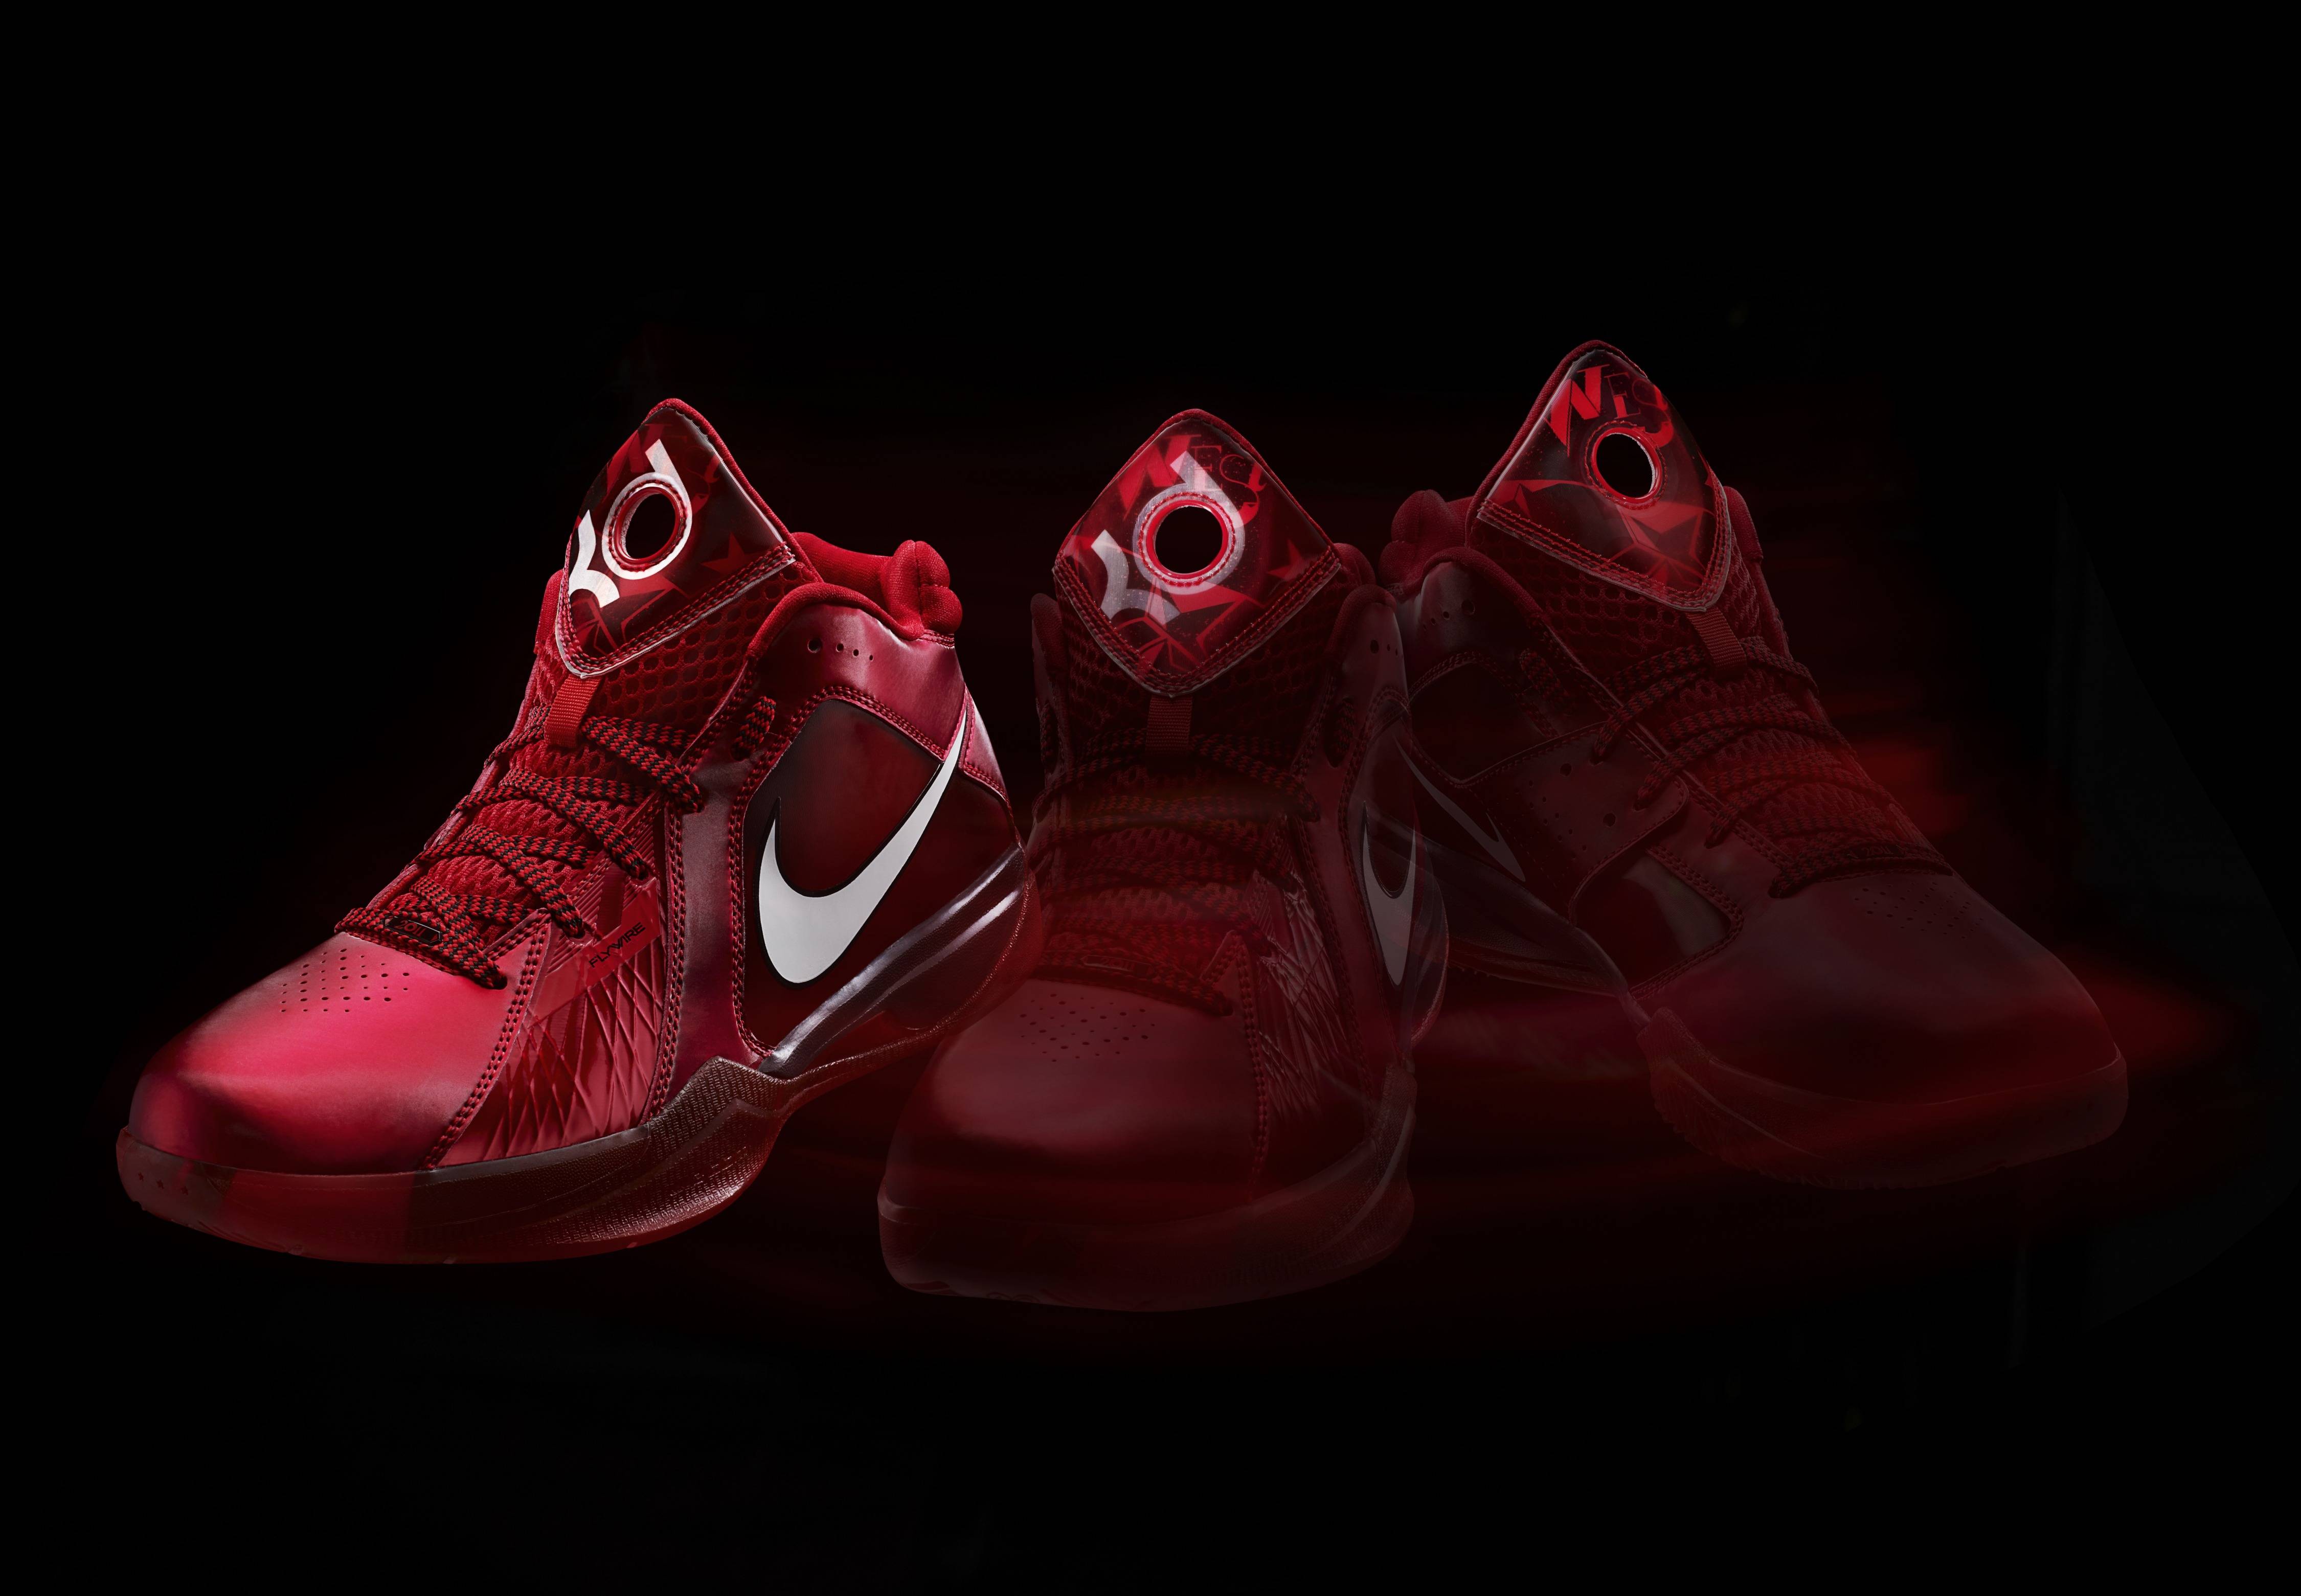 Wallpaper Sneakers Nike Red Desktop In